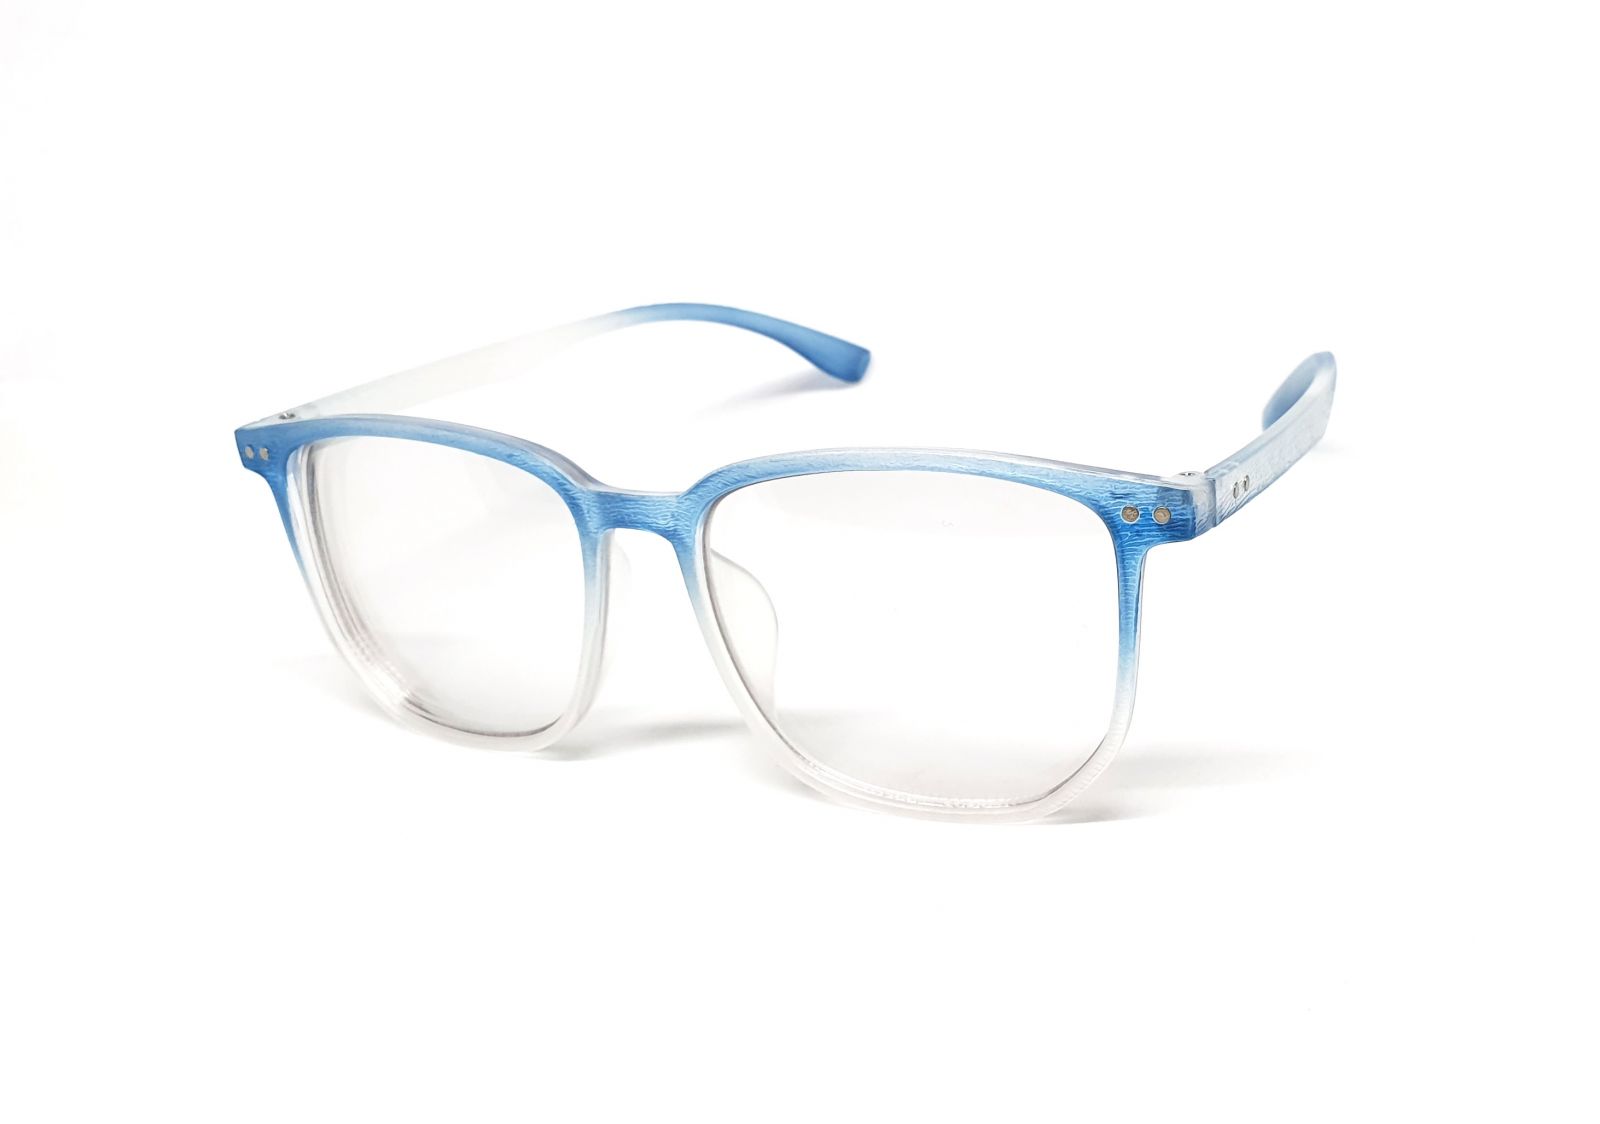 Samozabarvovací dioptrické brýle F23 / -5,00 blue transparent